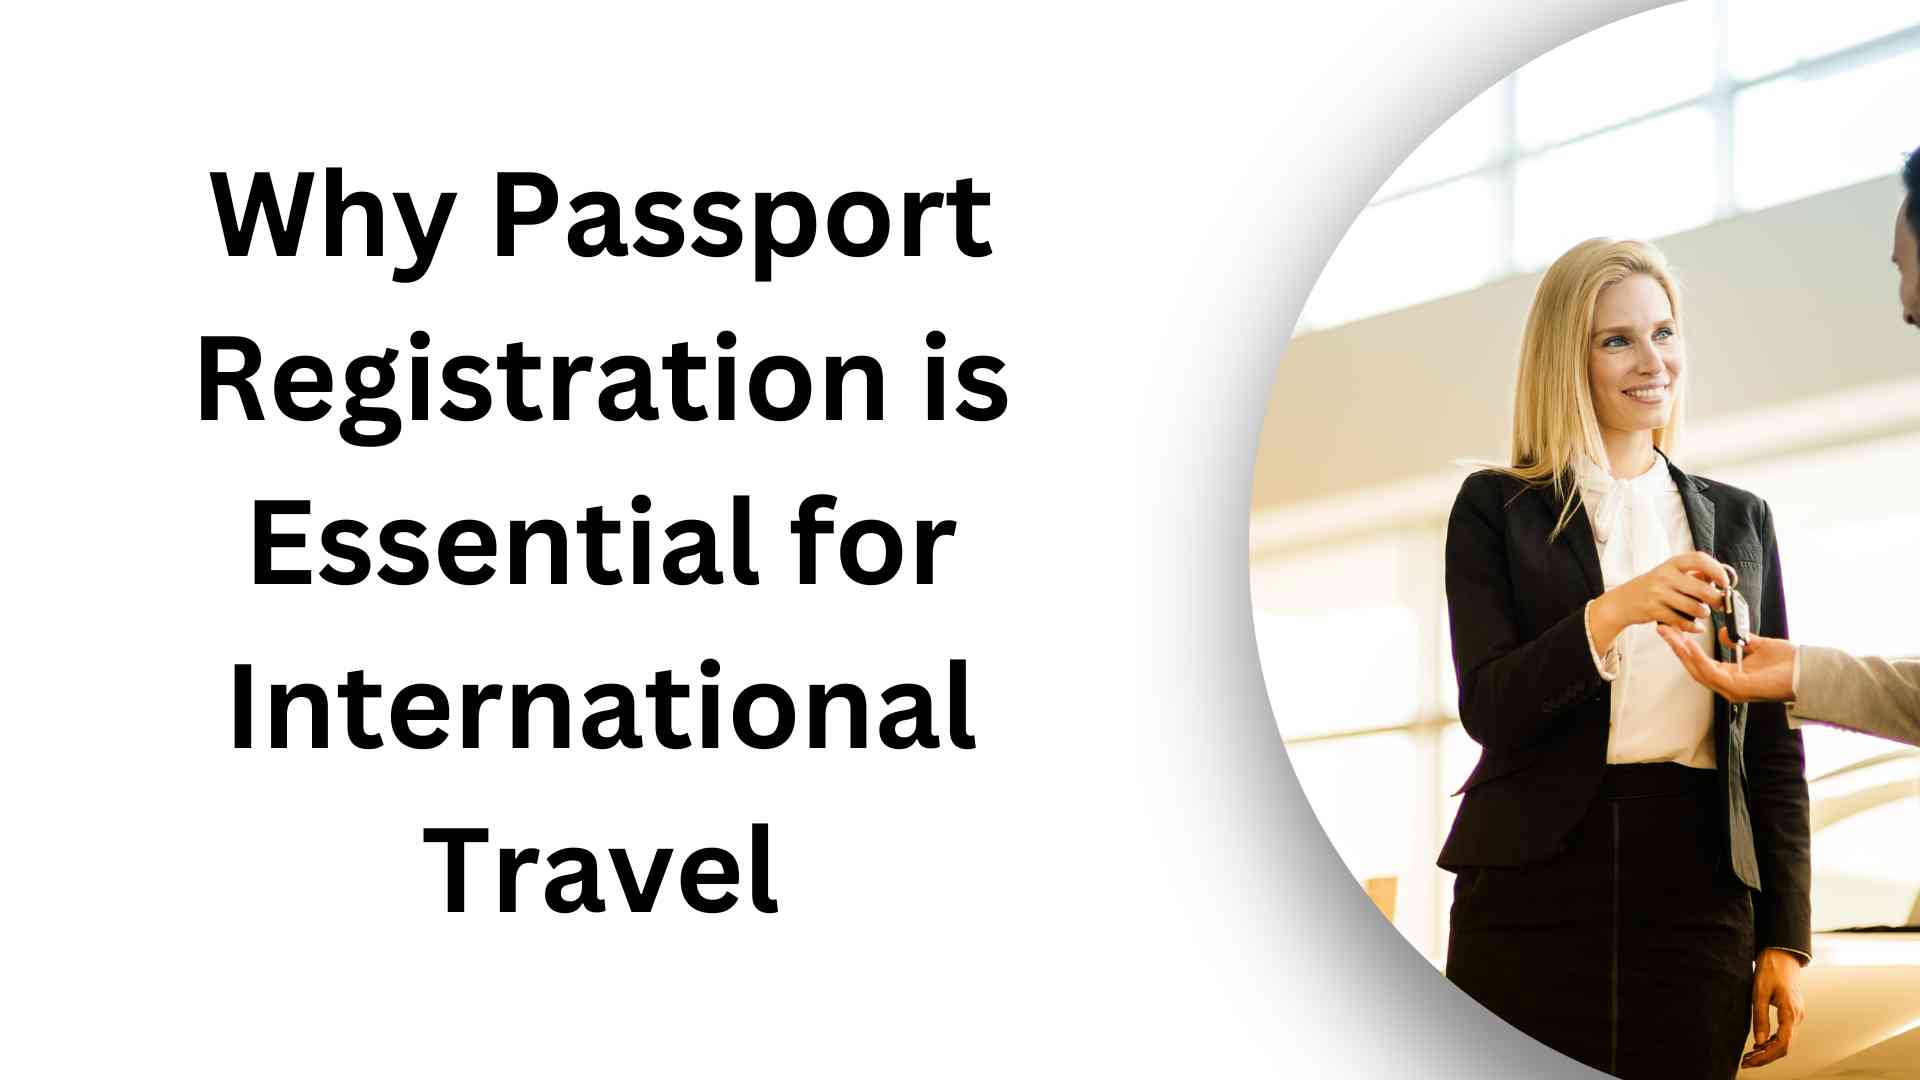 Why Passport Registration is Essential for International Travel